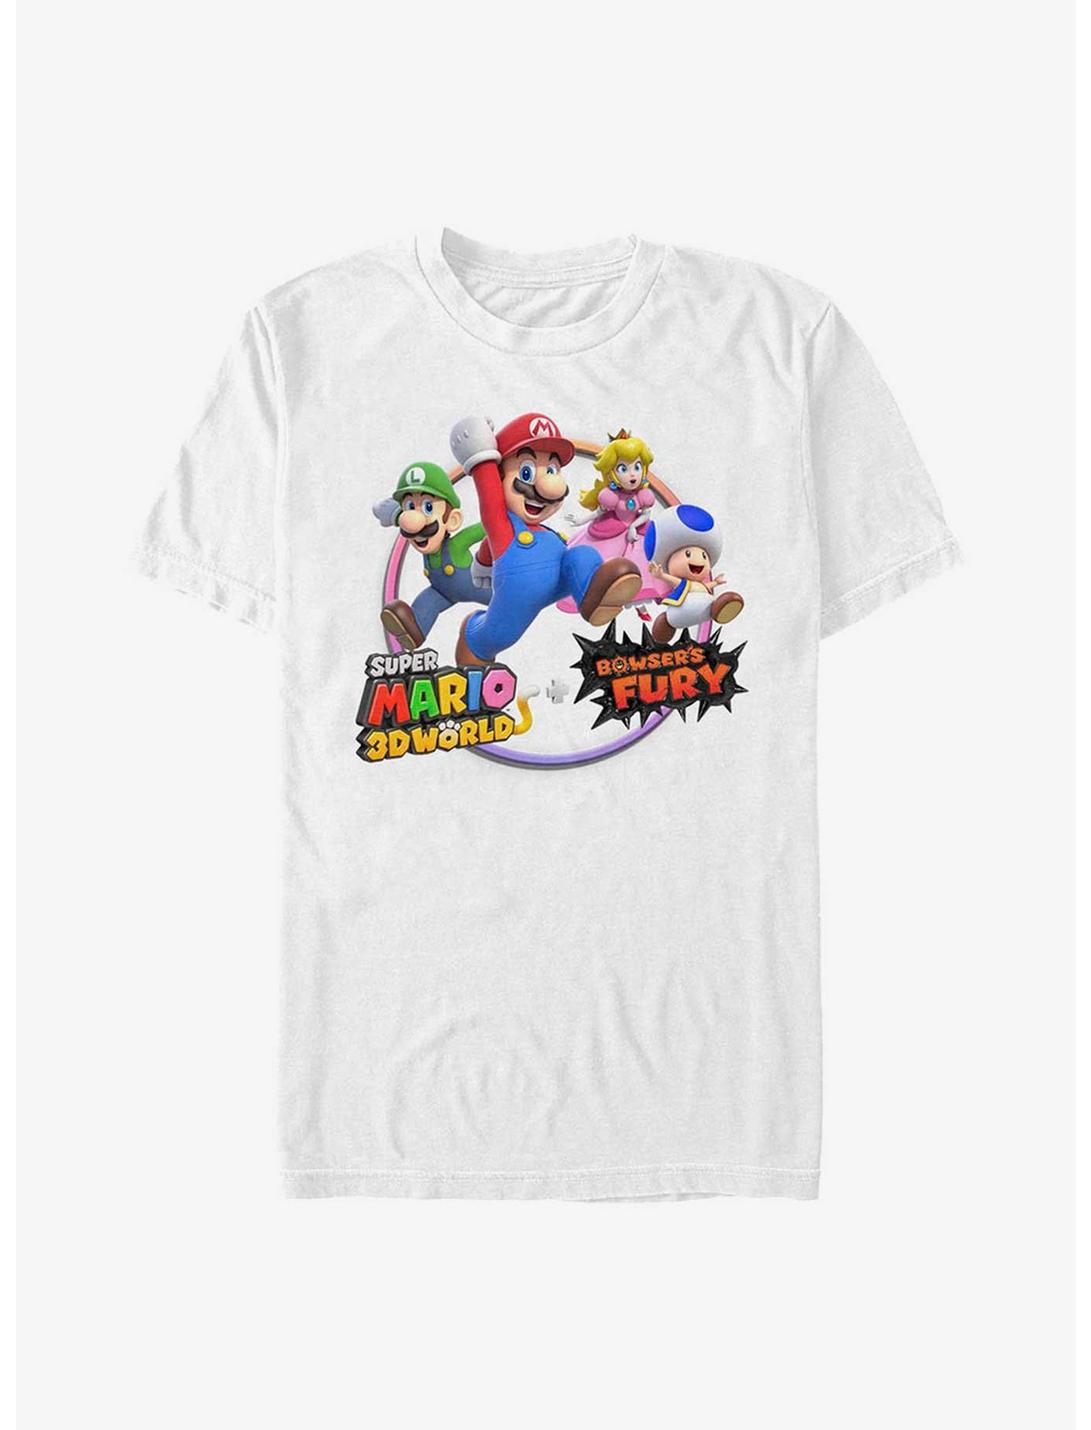 Nintendo Super Mario 3D World Bowser's Fury Group T-Shirt, WHITE, hi-res